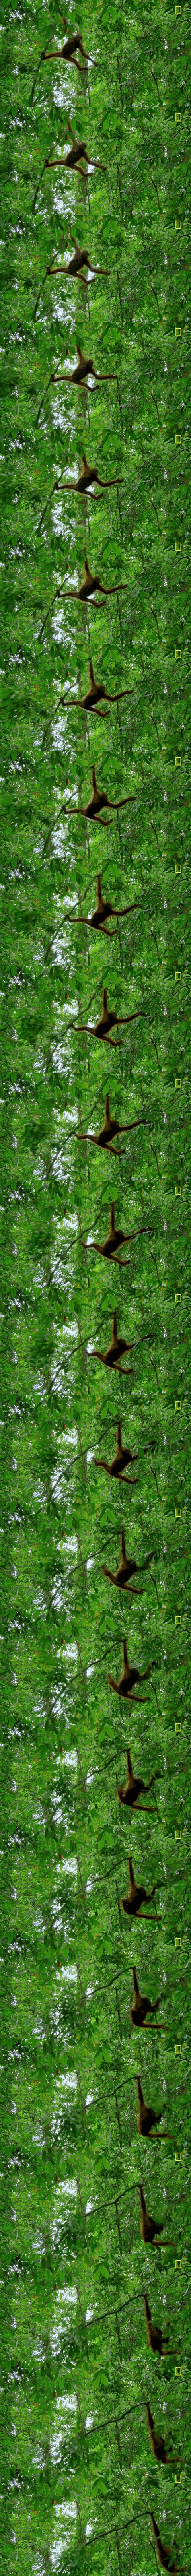 Orangutan swinging